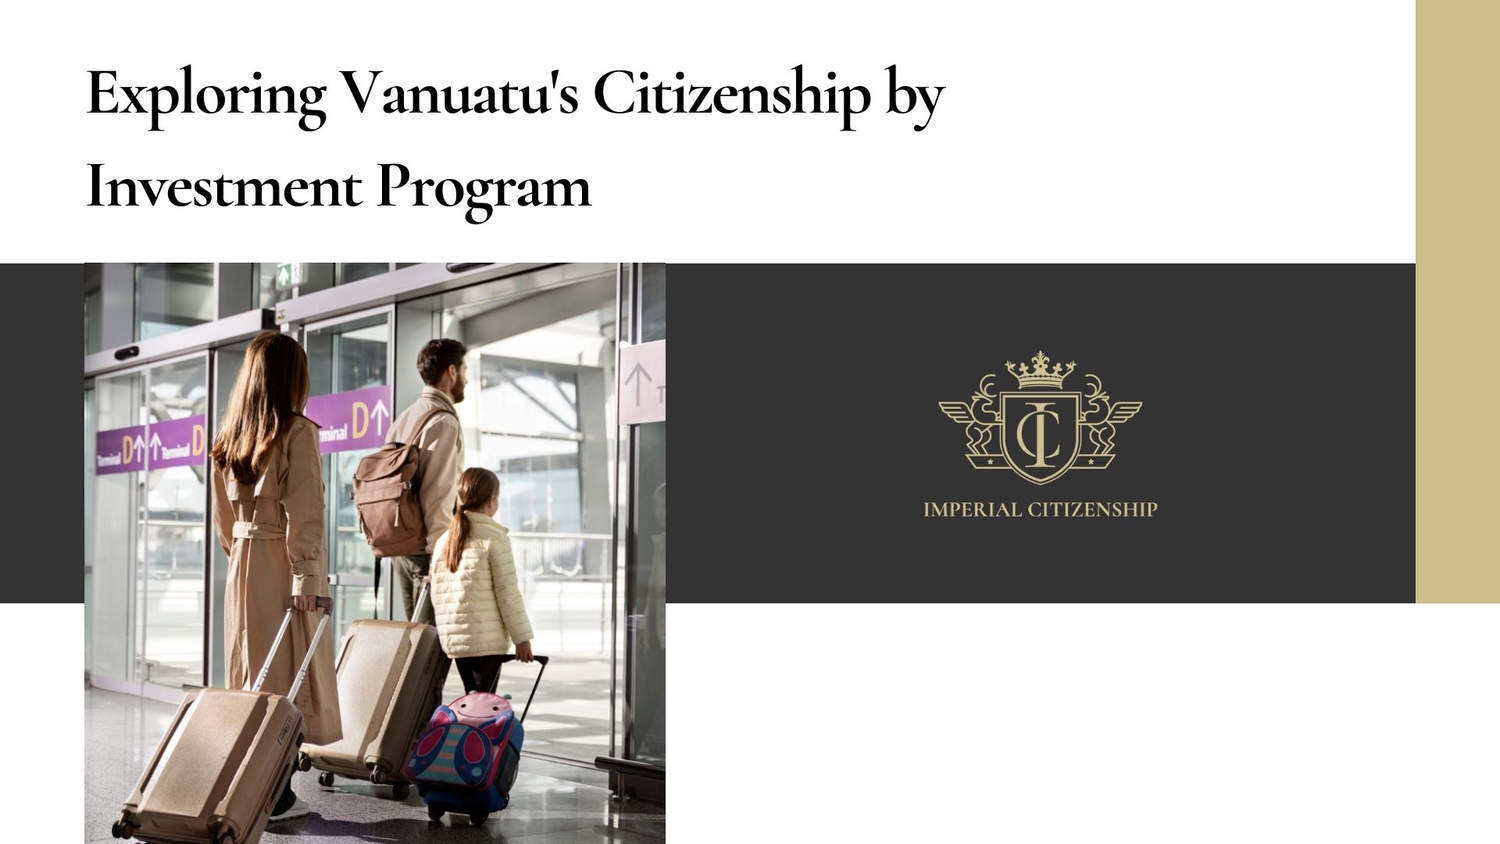 Vanuatu's Citizenship by Investment Program